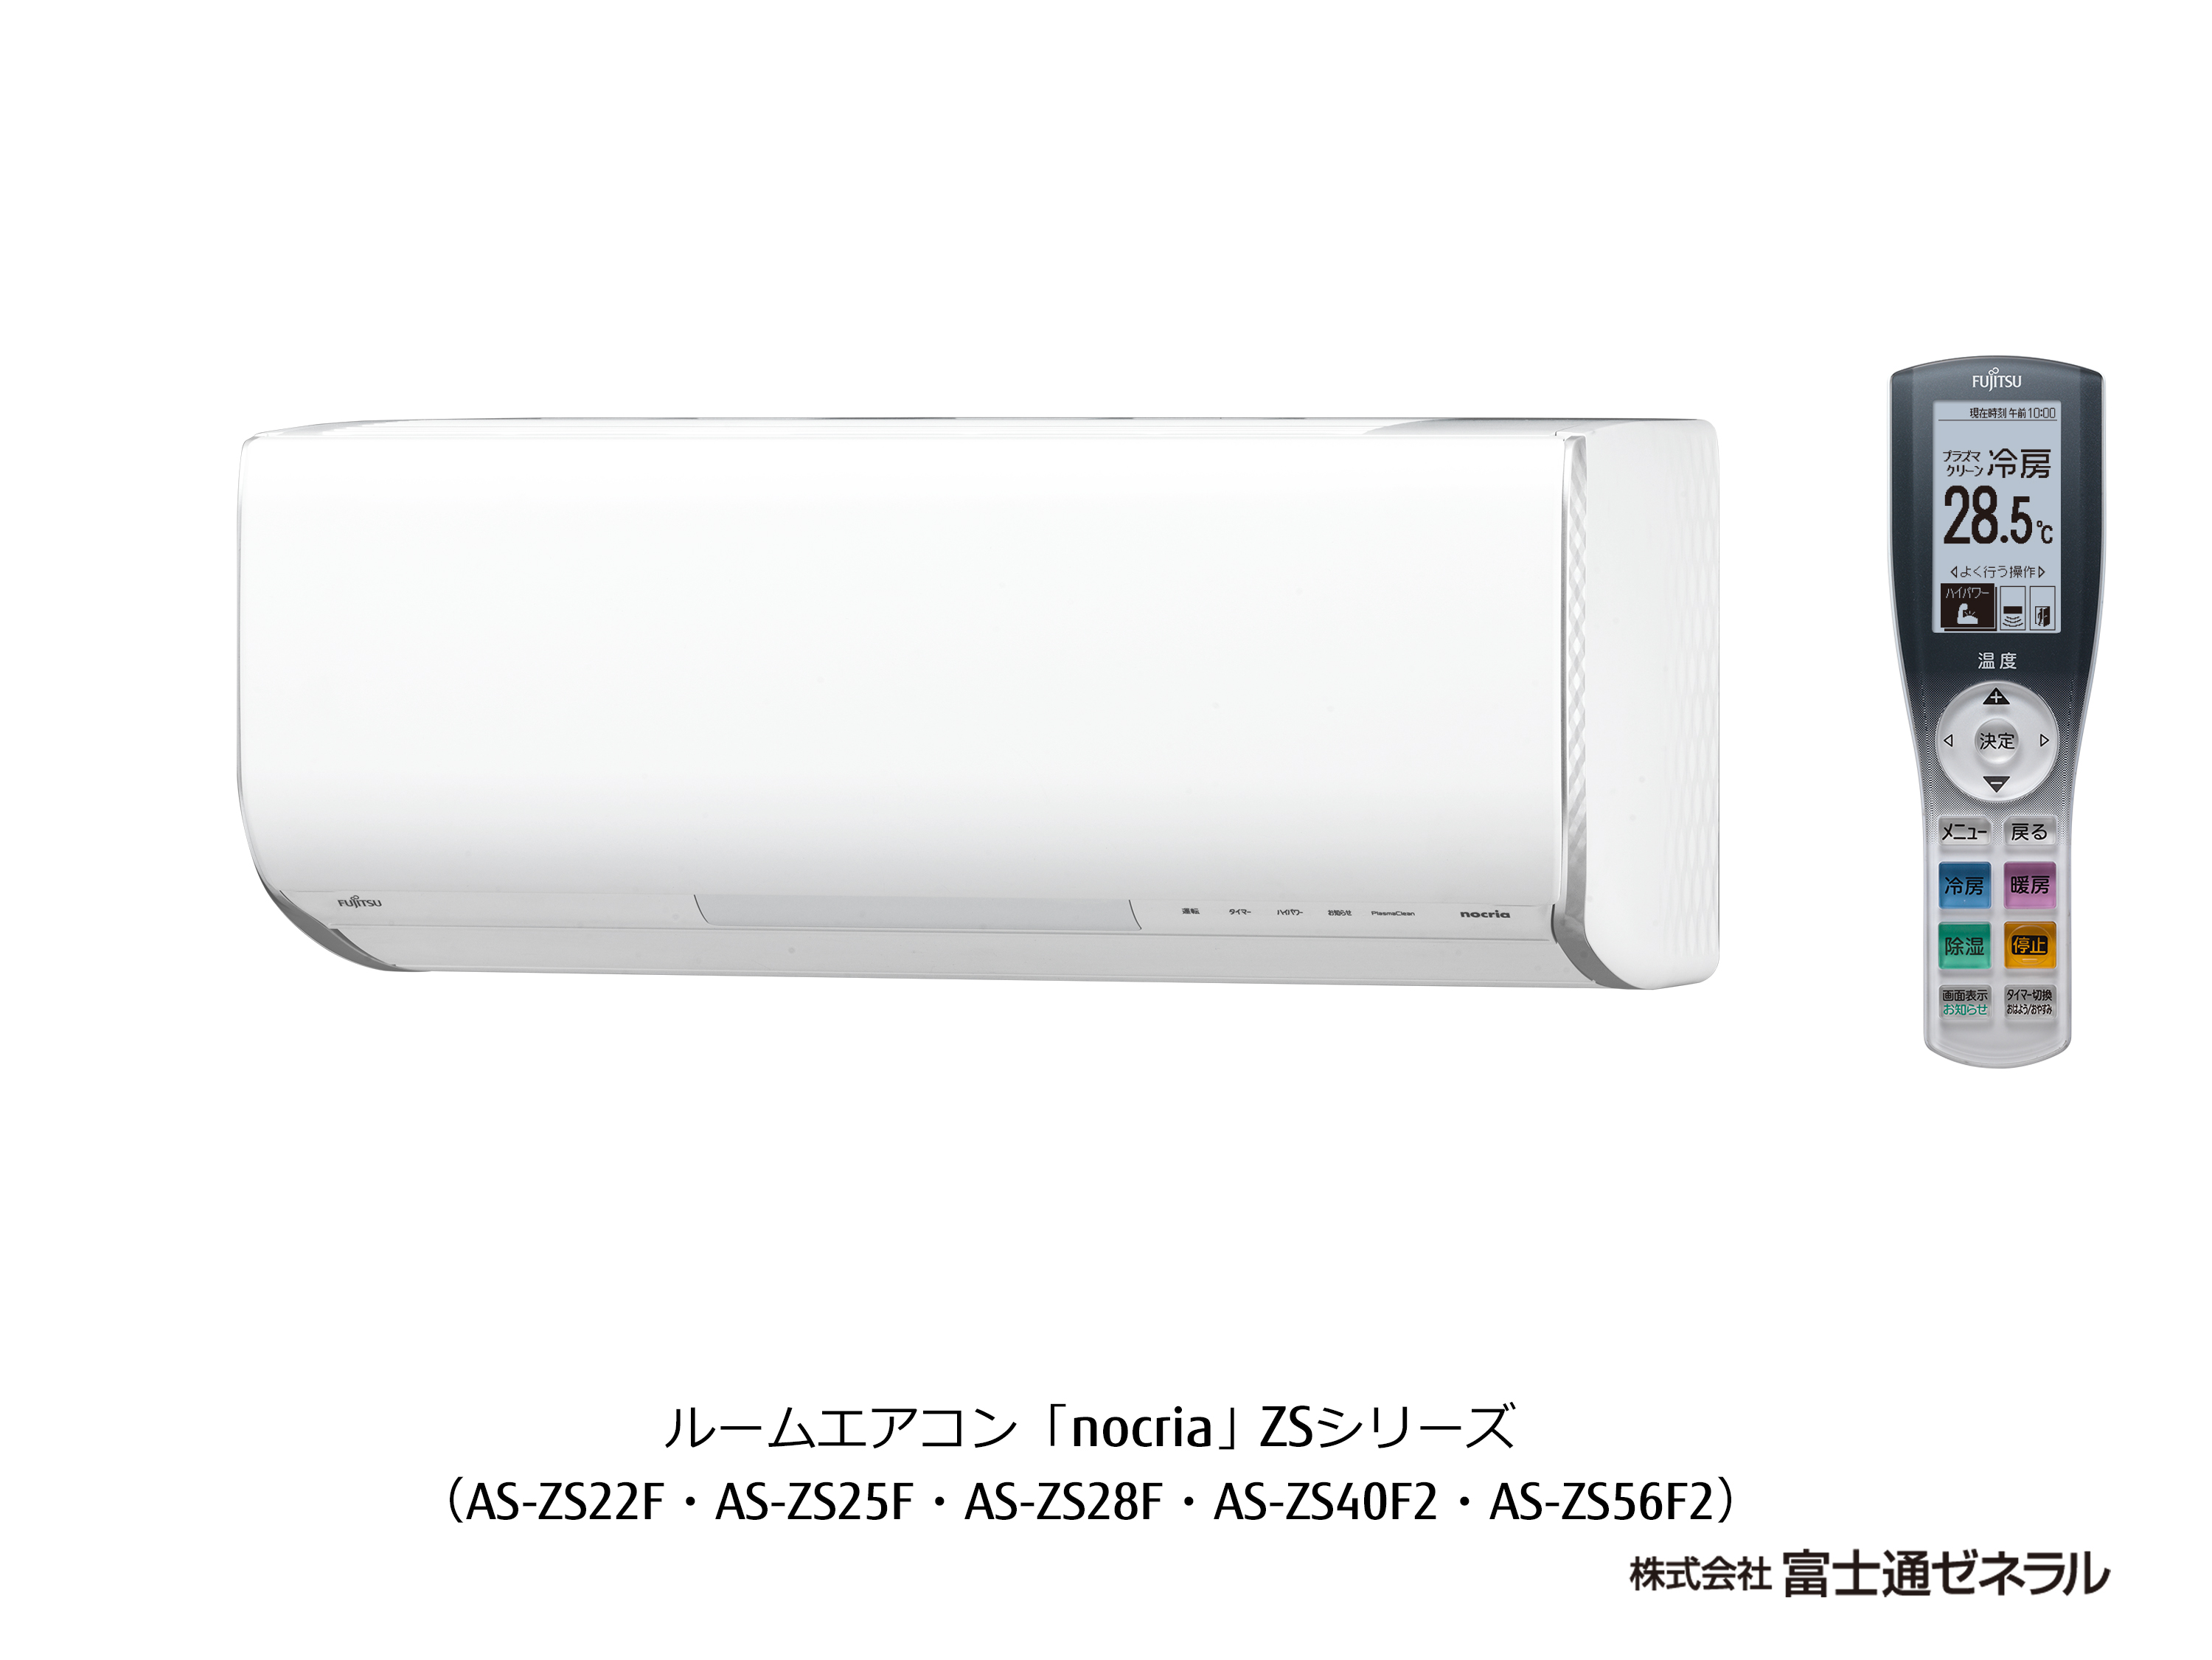 AS-ZS56F2 概要 2016年 エアコン nocria®ZSシリーズ - 富士通ゼネラル JP